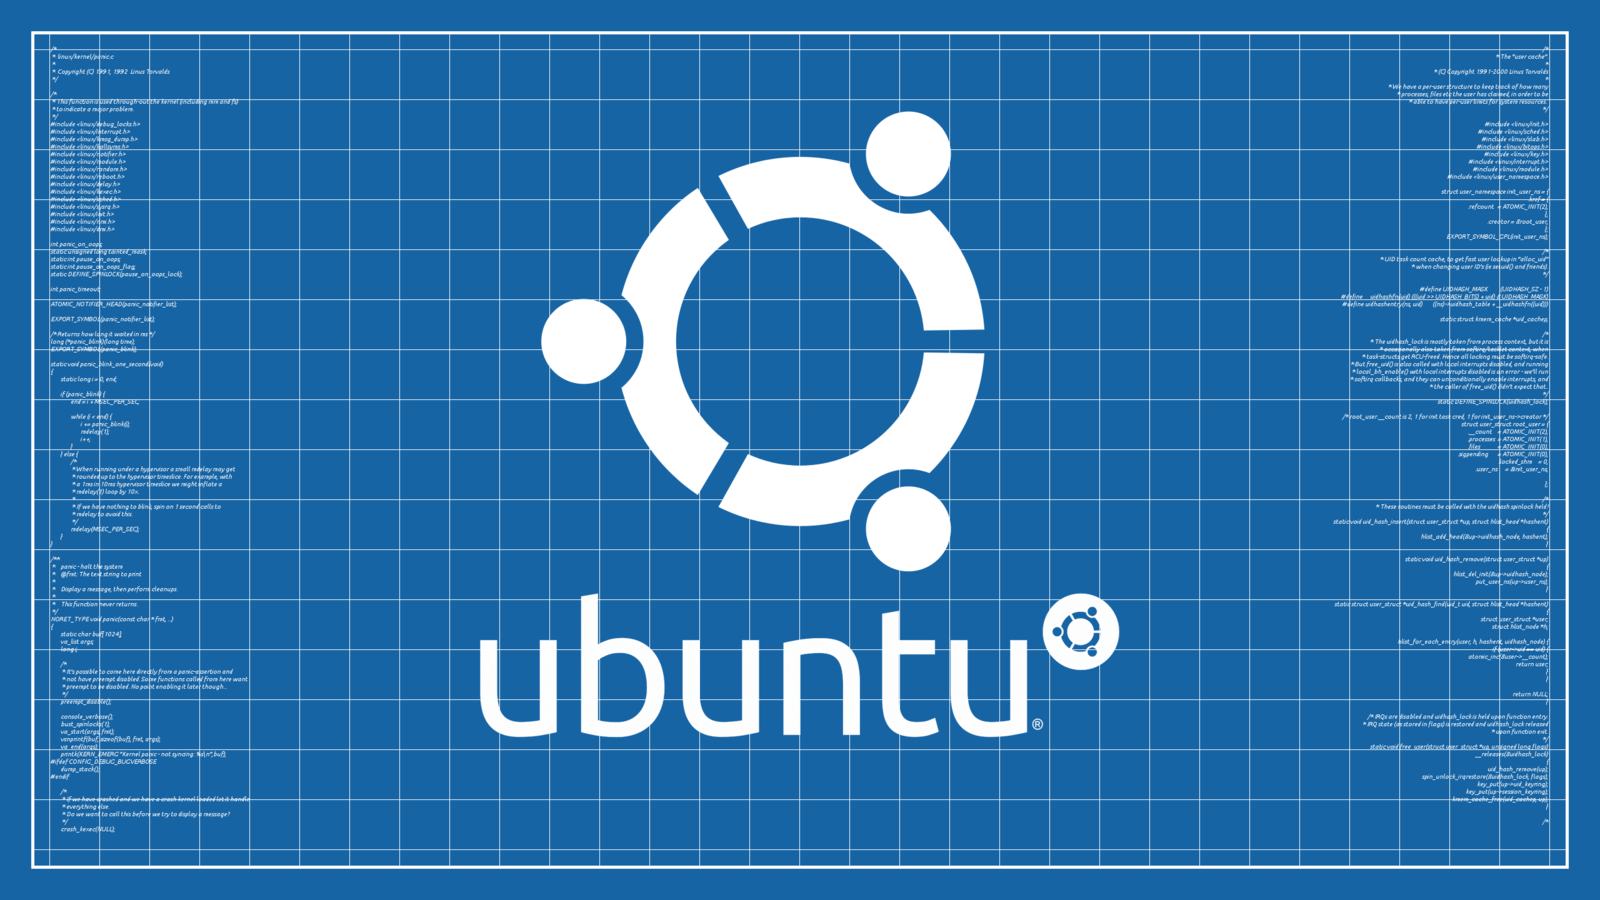 Ubuntu Blueprint Wallpaper Rev. 2